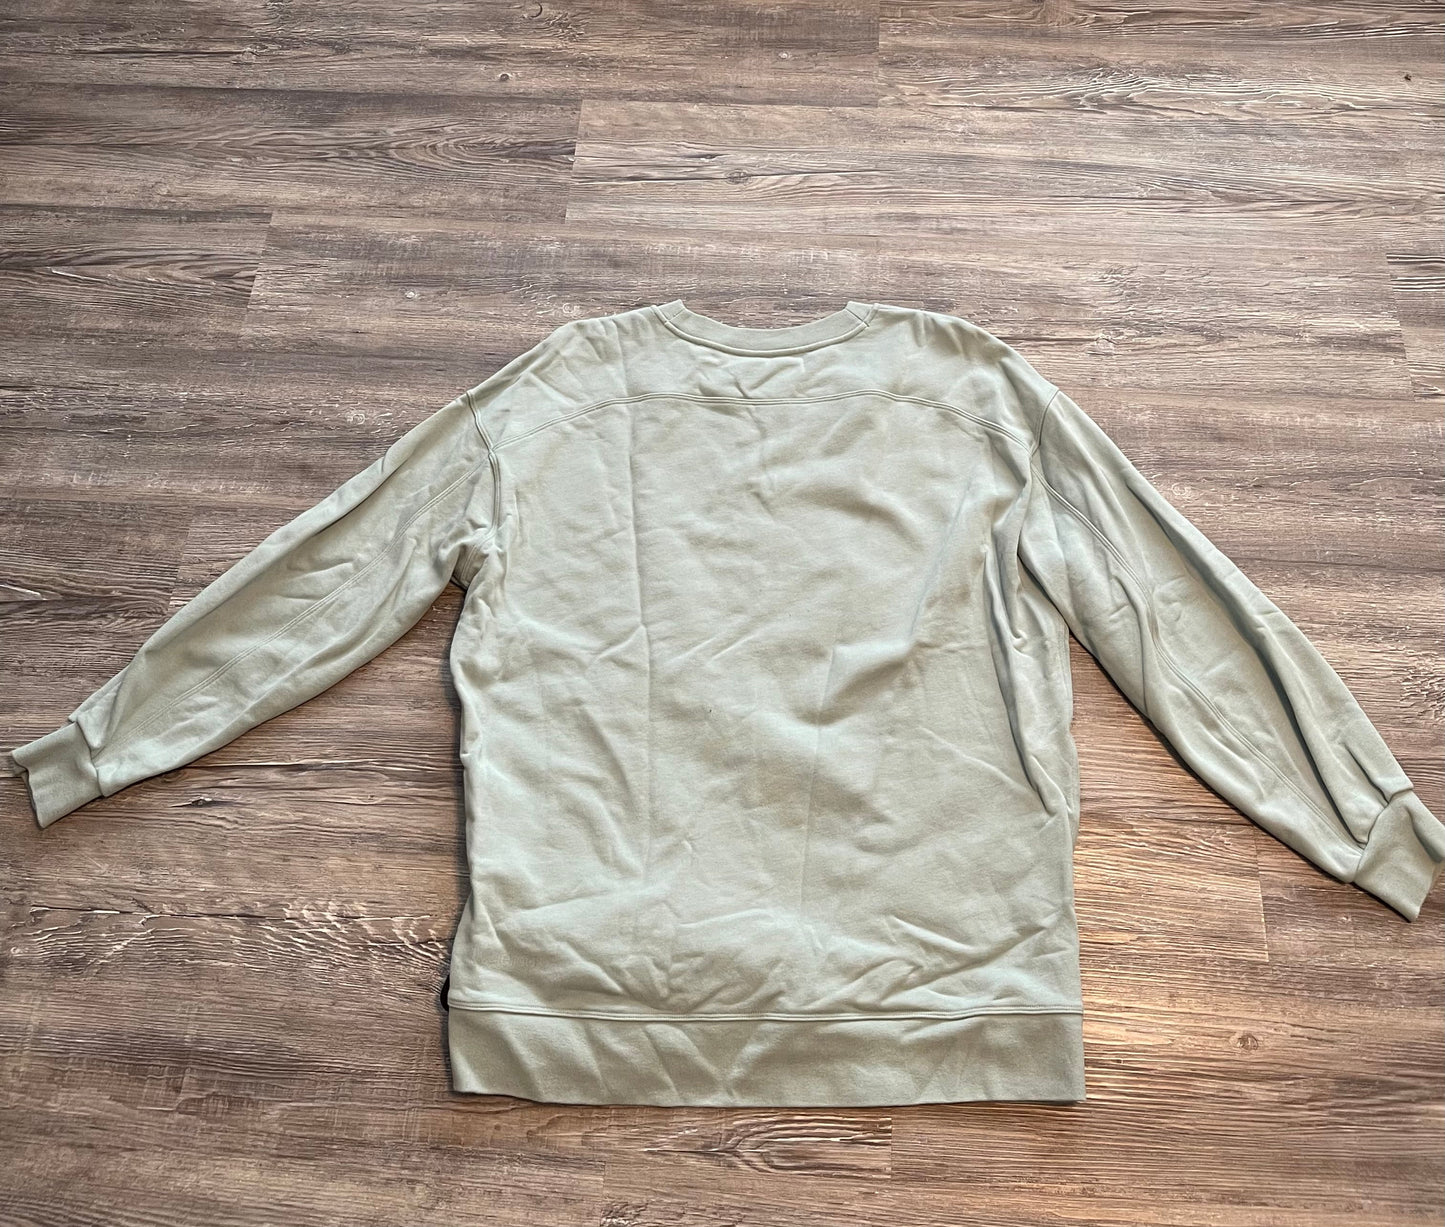 Sweatshirt Crewneck By Clothes Mentor  Size: L